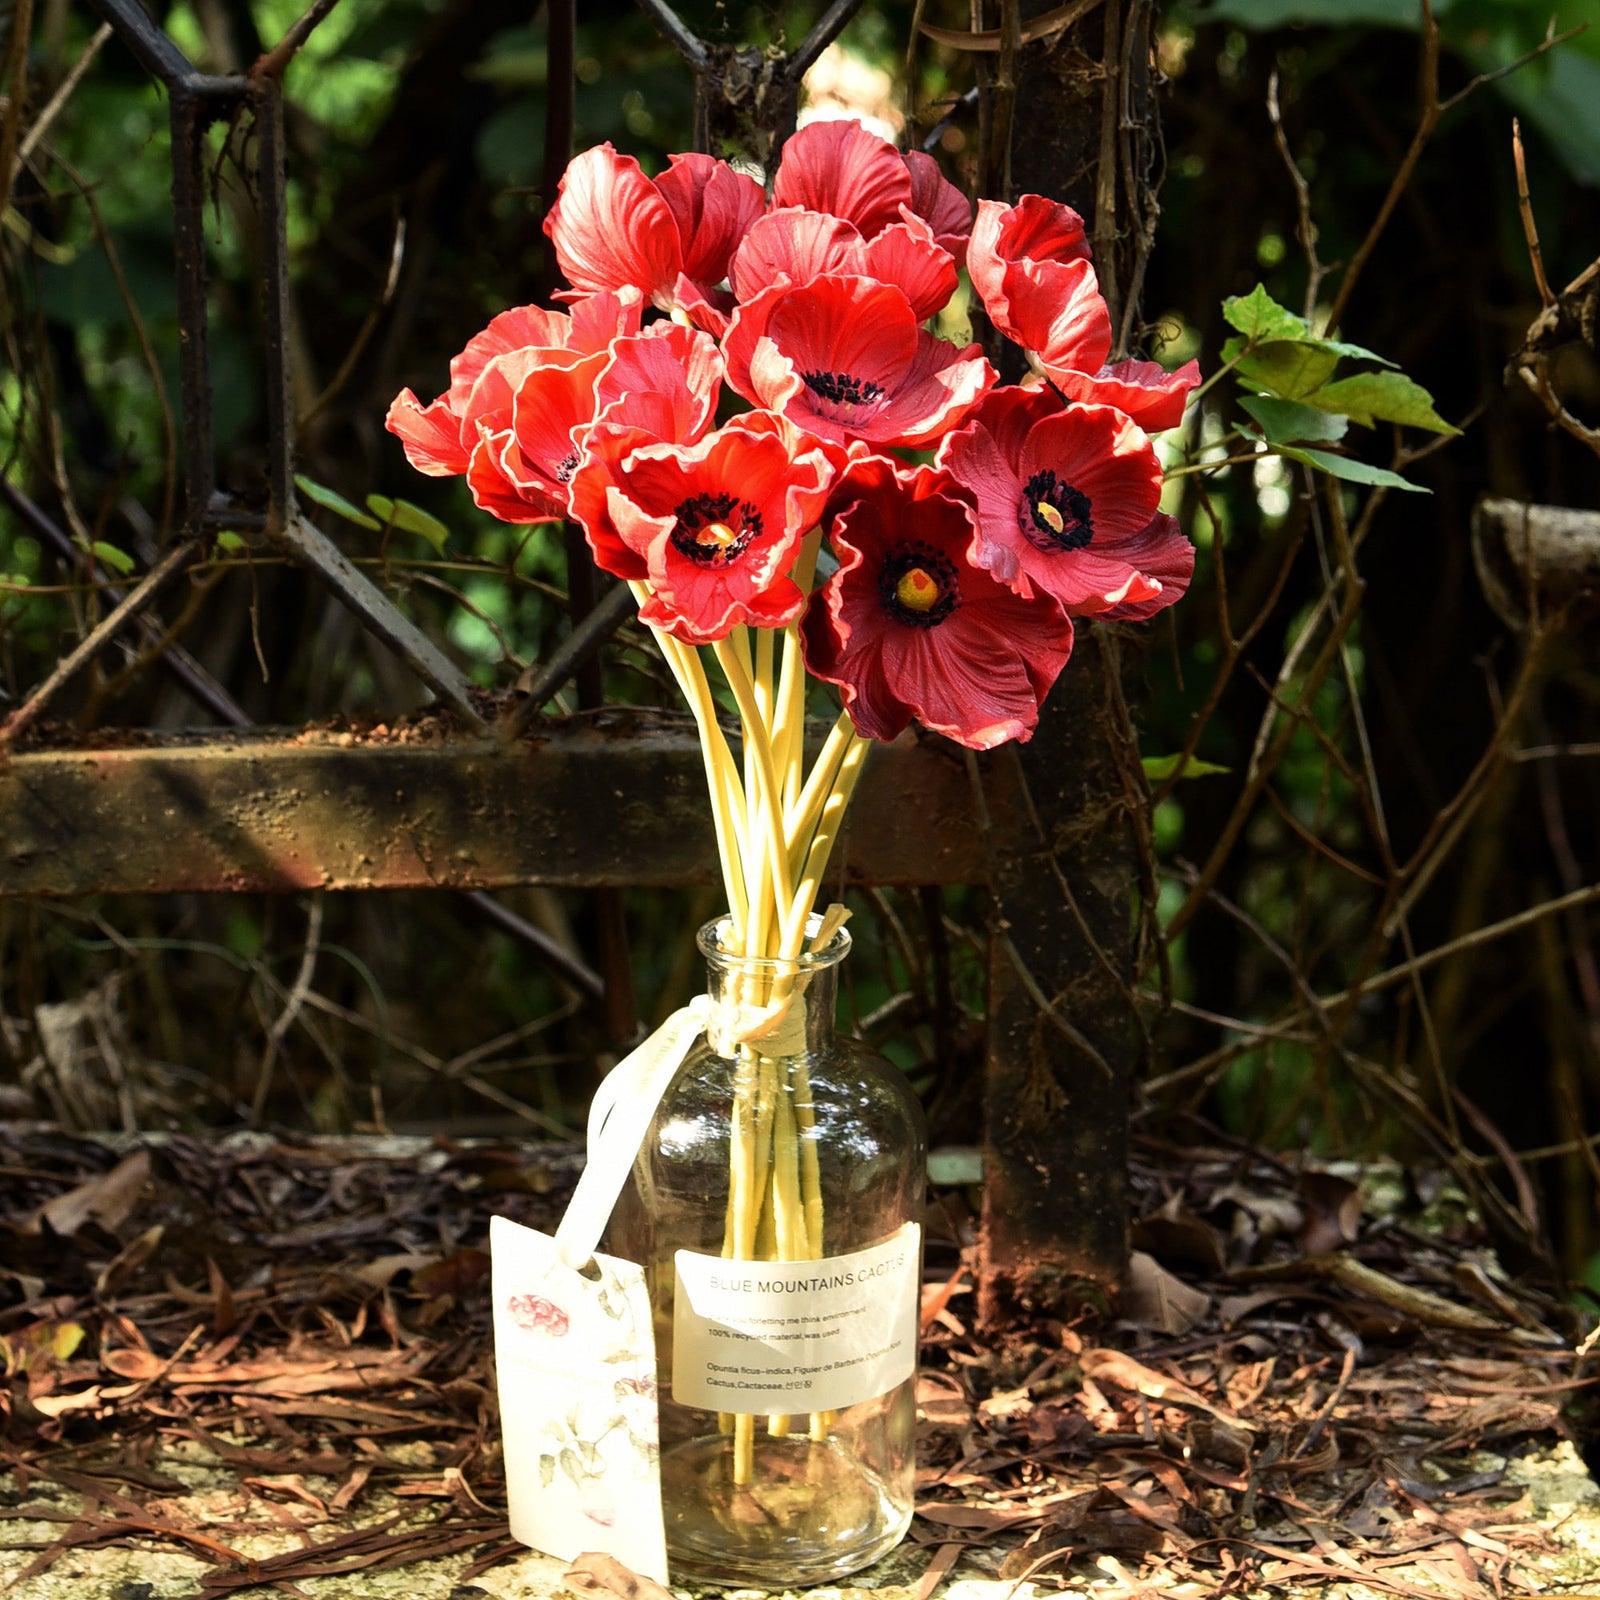 Versatile Artificial Holly Red Berry Stems: Set of 10 for Stunning Decor  Fiveseasonstuff Floral 